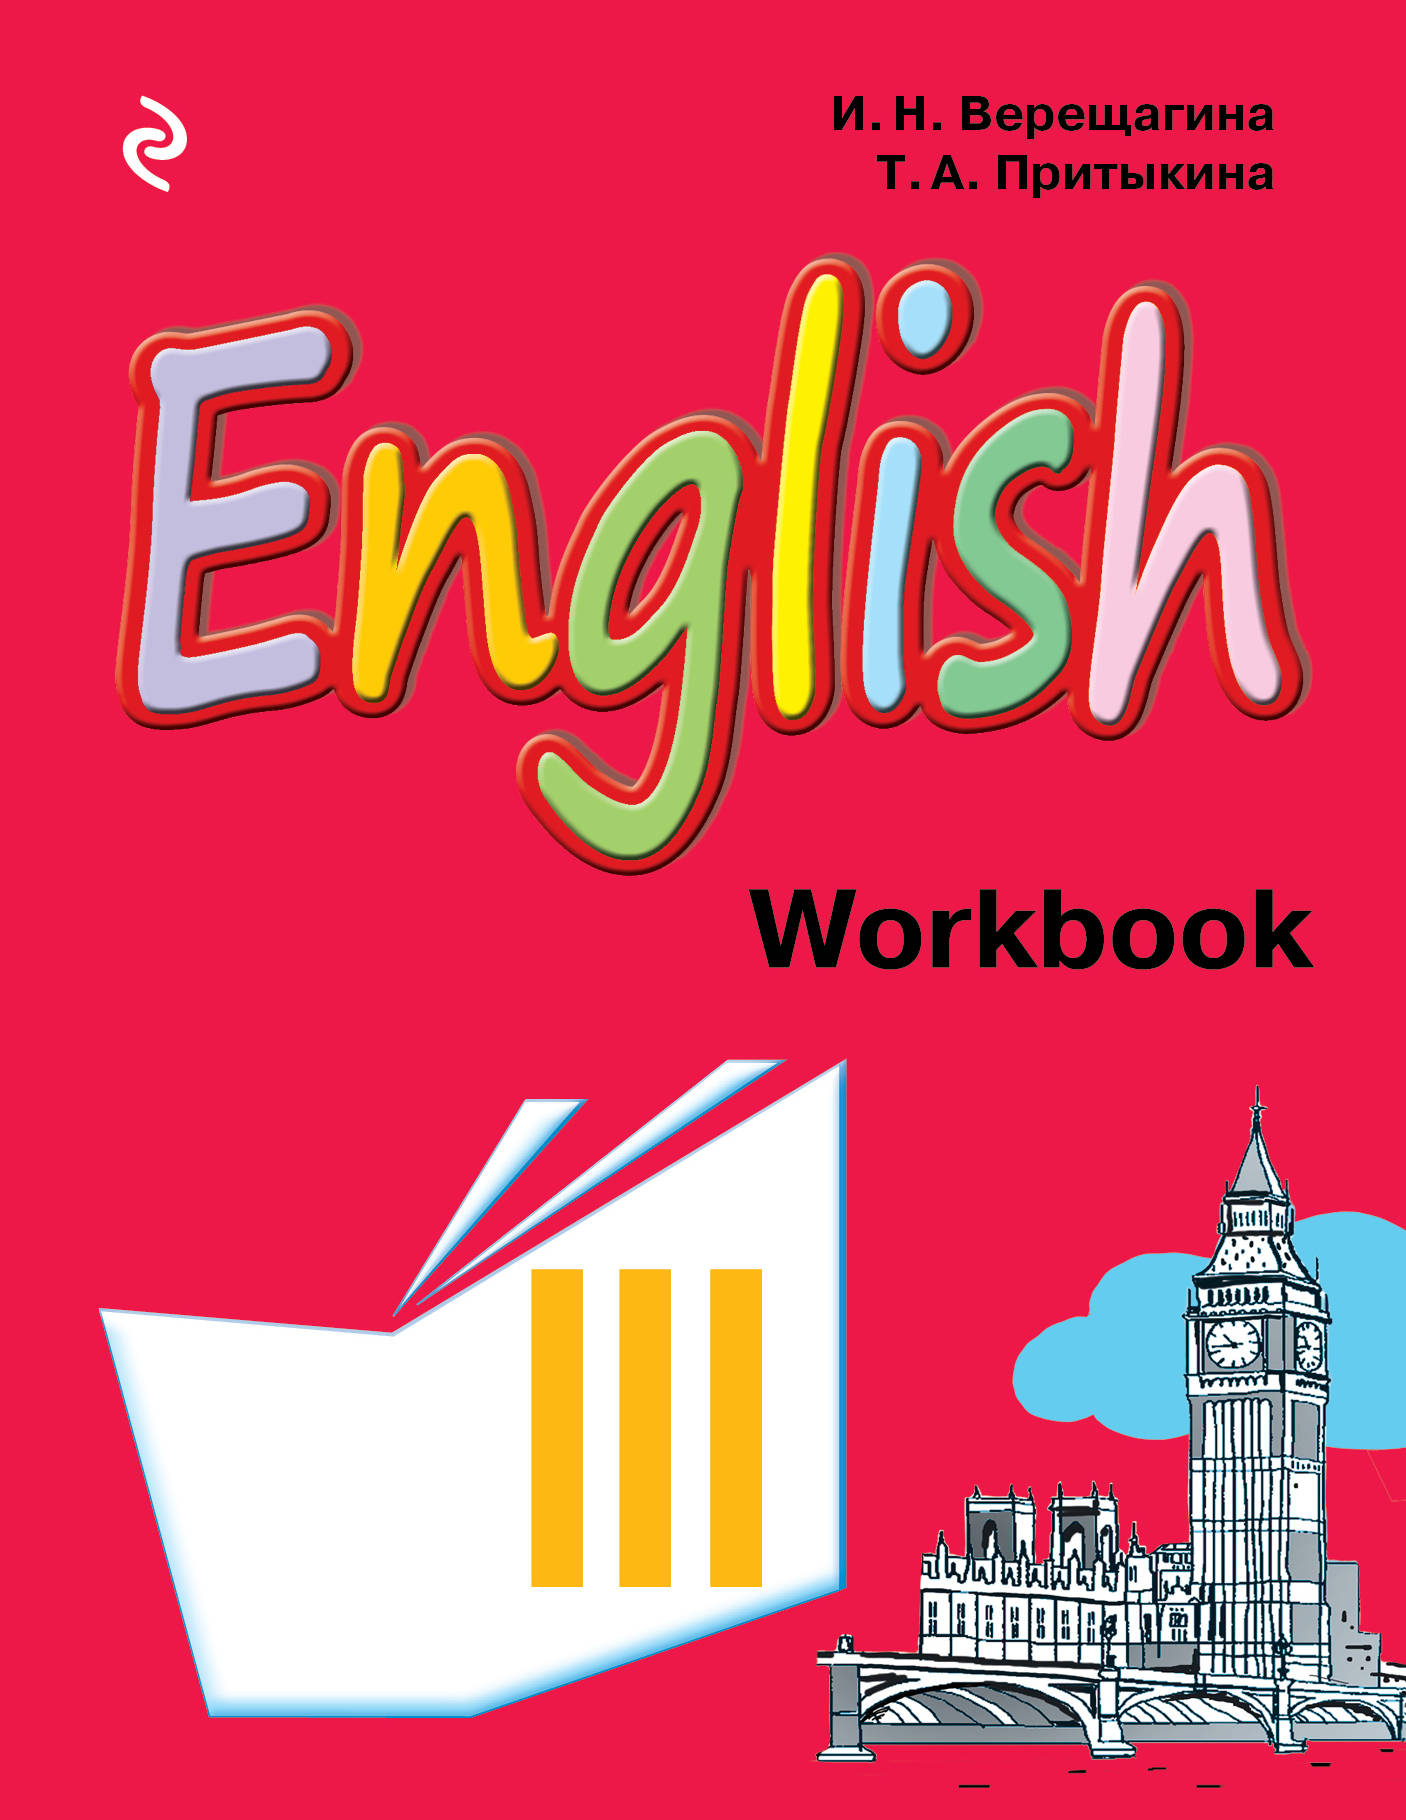 English 3: Workbook / Английский язык. 3 класс. Рабочая тетрадь. И. Н. Верещагина, Т. А. Притыкина